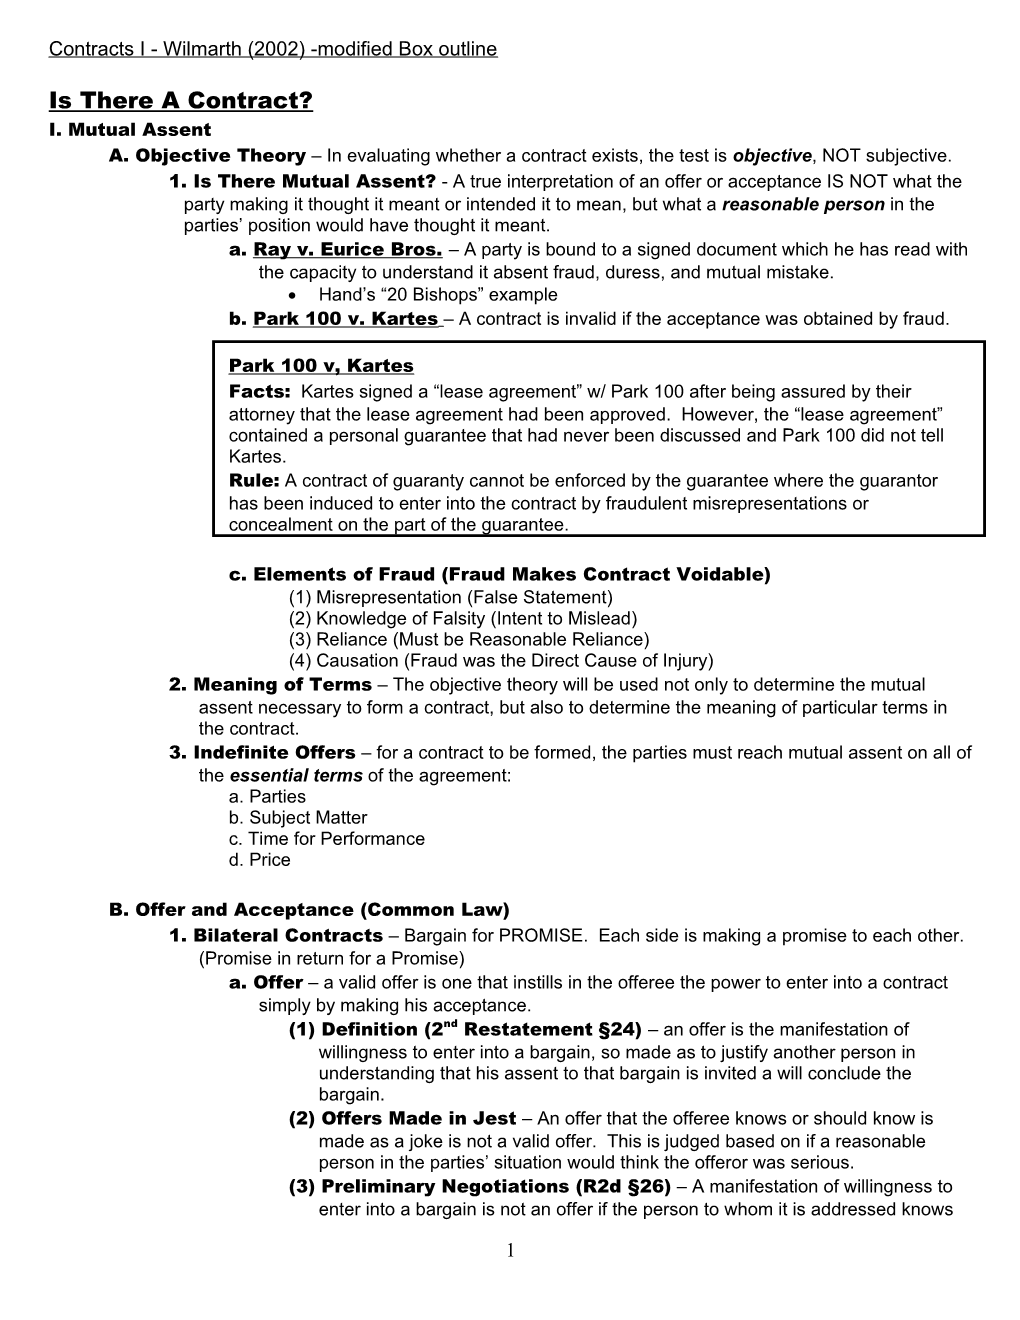 Contracts I - Wilmarth (2002) -Modified Box Outline